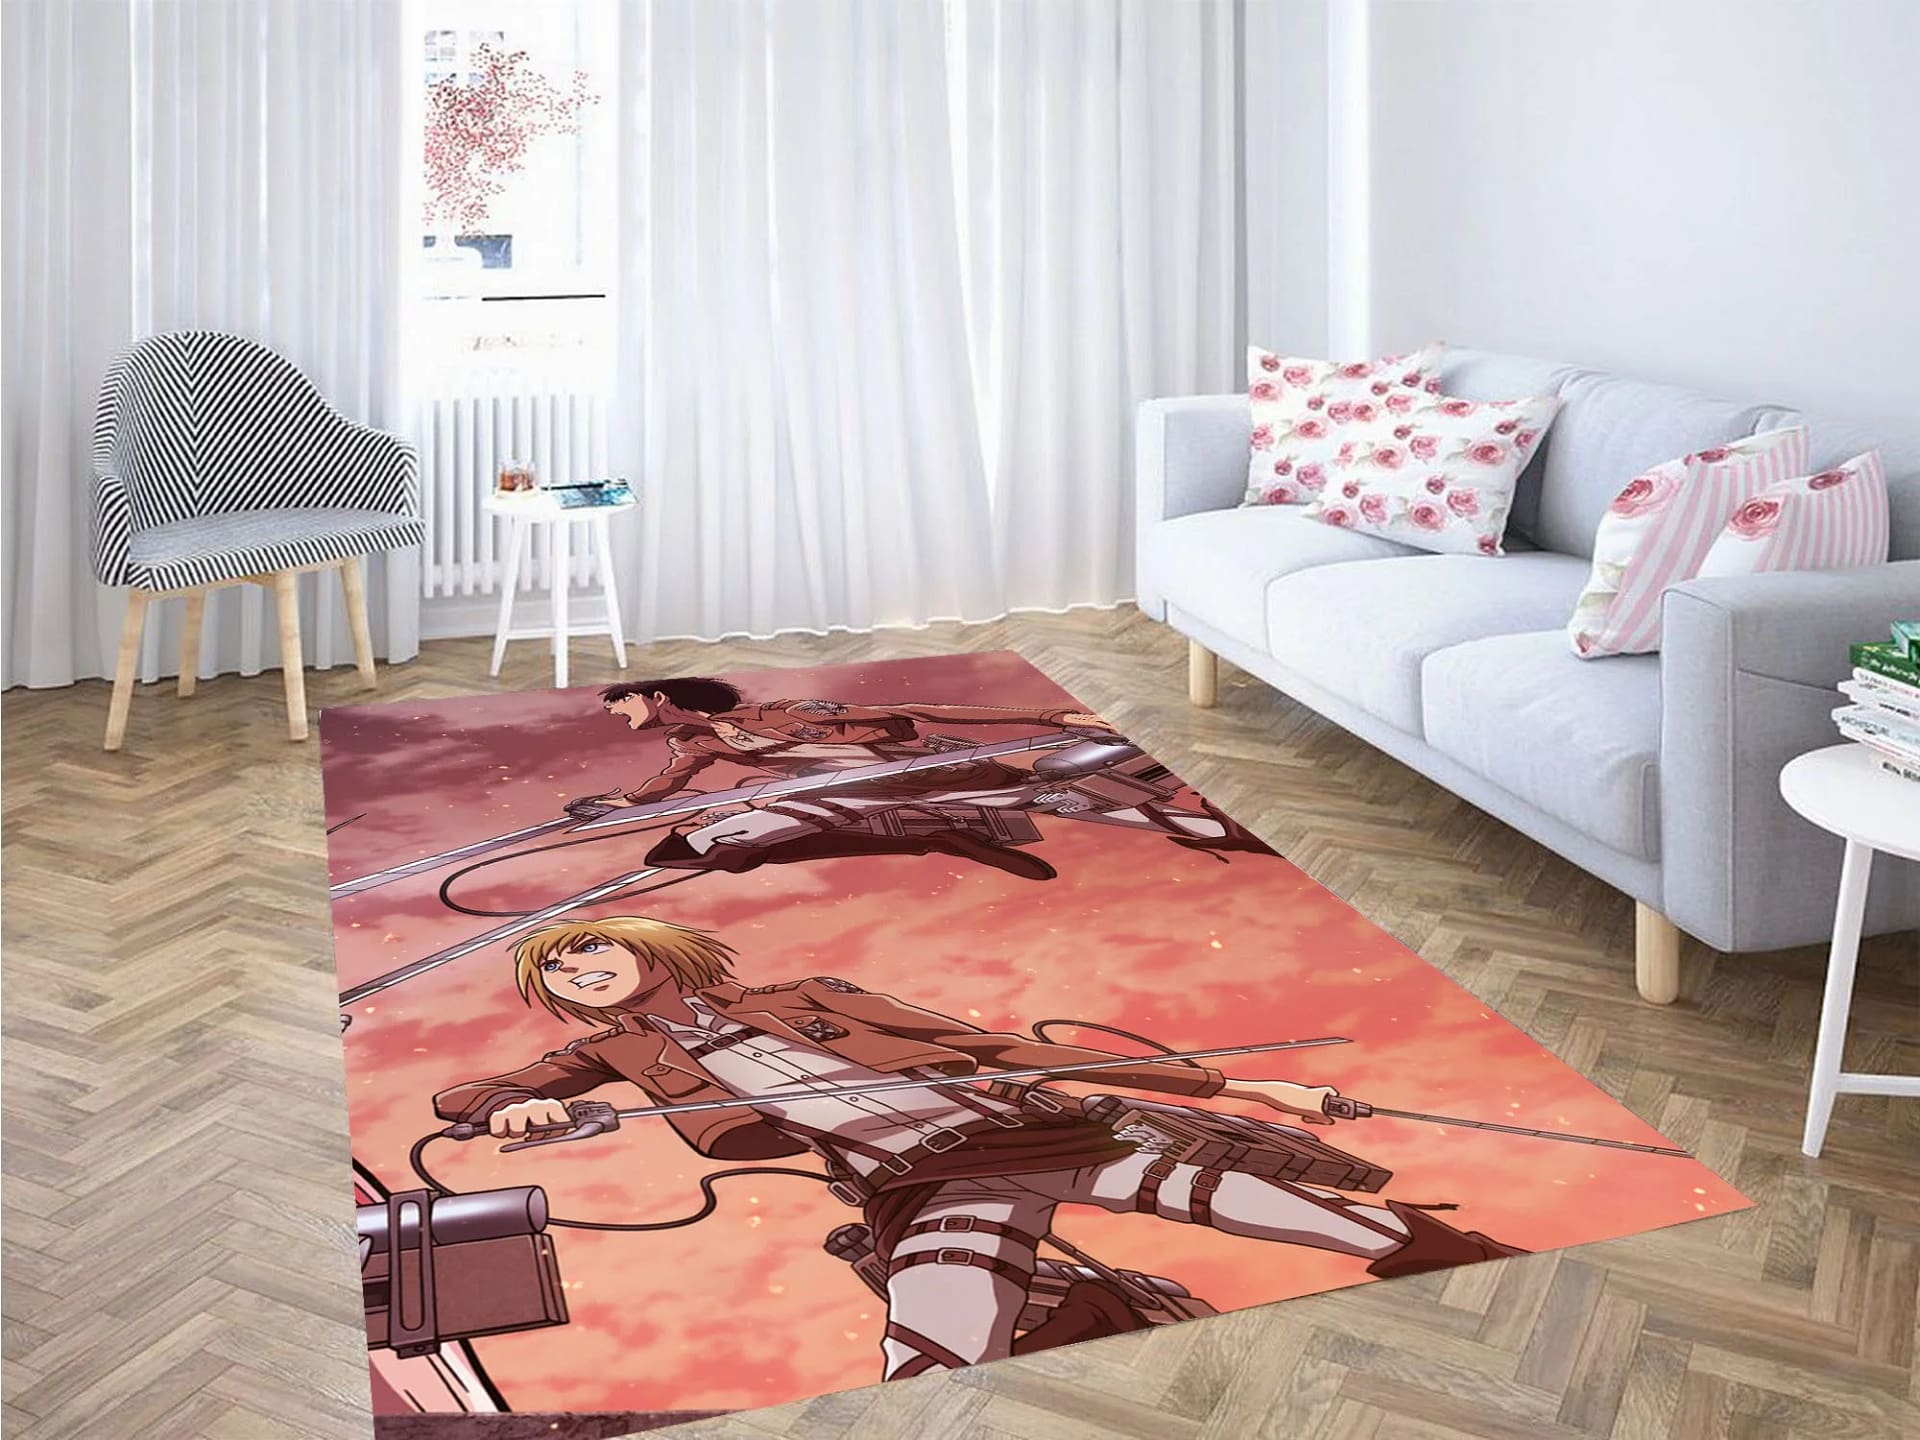 Armin And Eren Attack On Titan Carpet Rug